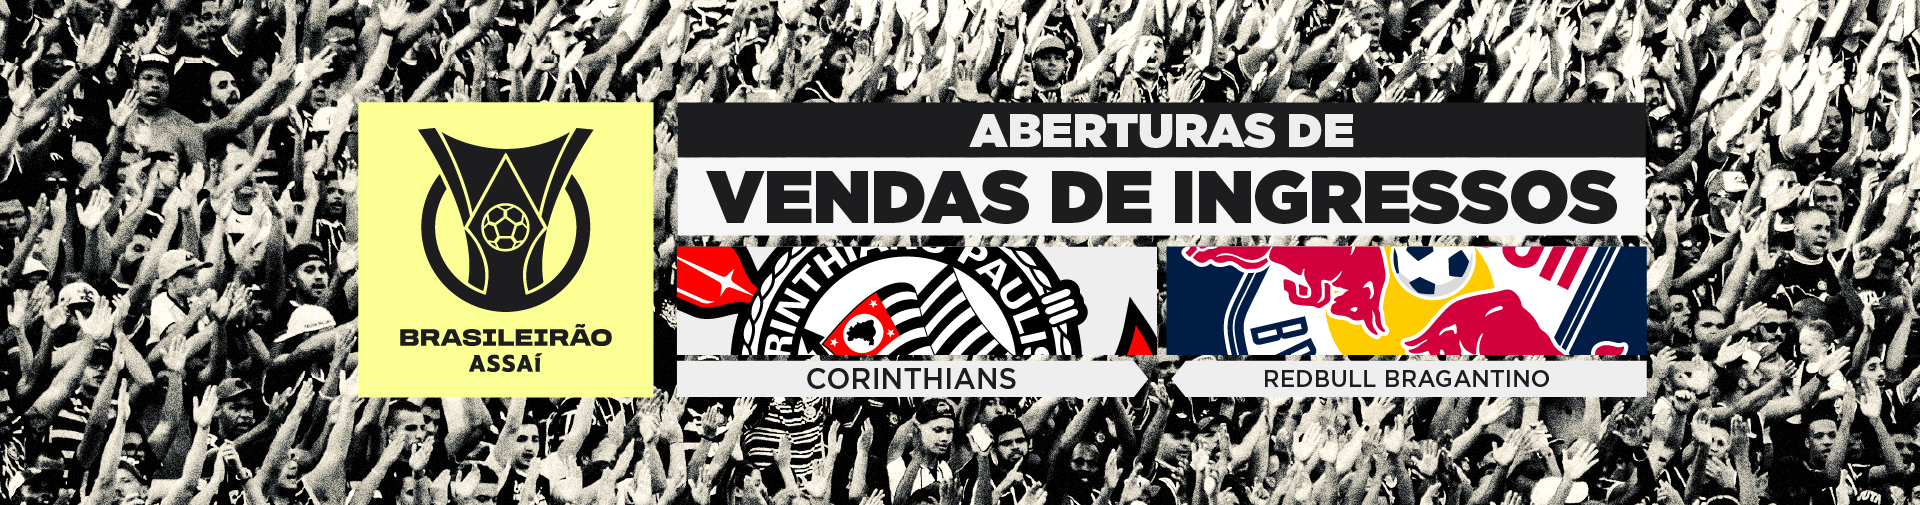 Brasileirão - Ingressos:Corinthians x Red Bull Bragantino (27/8) - Neo Química Arena